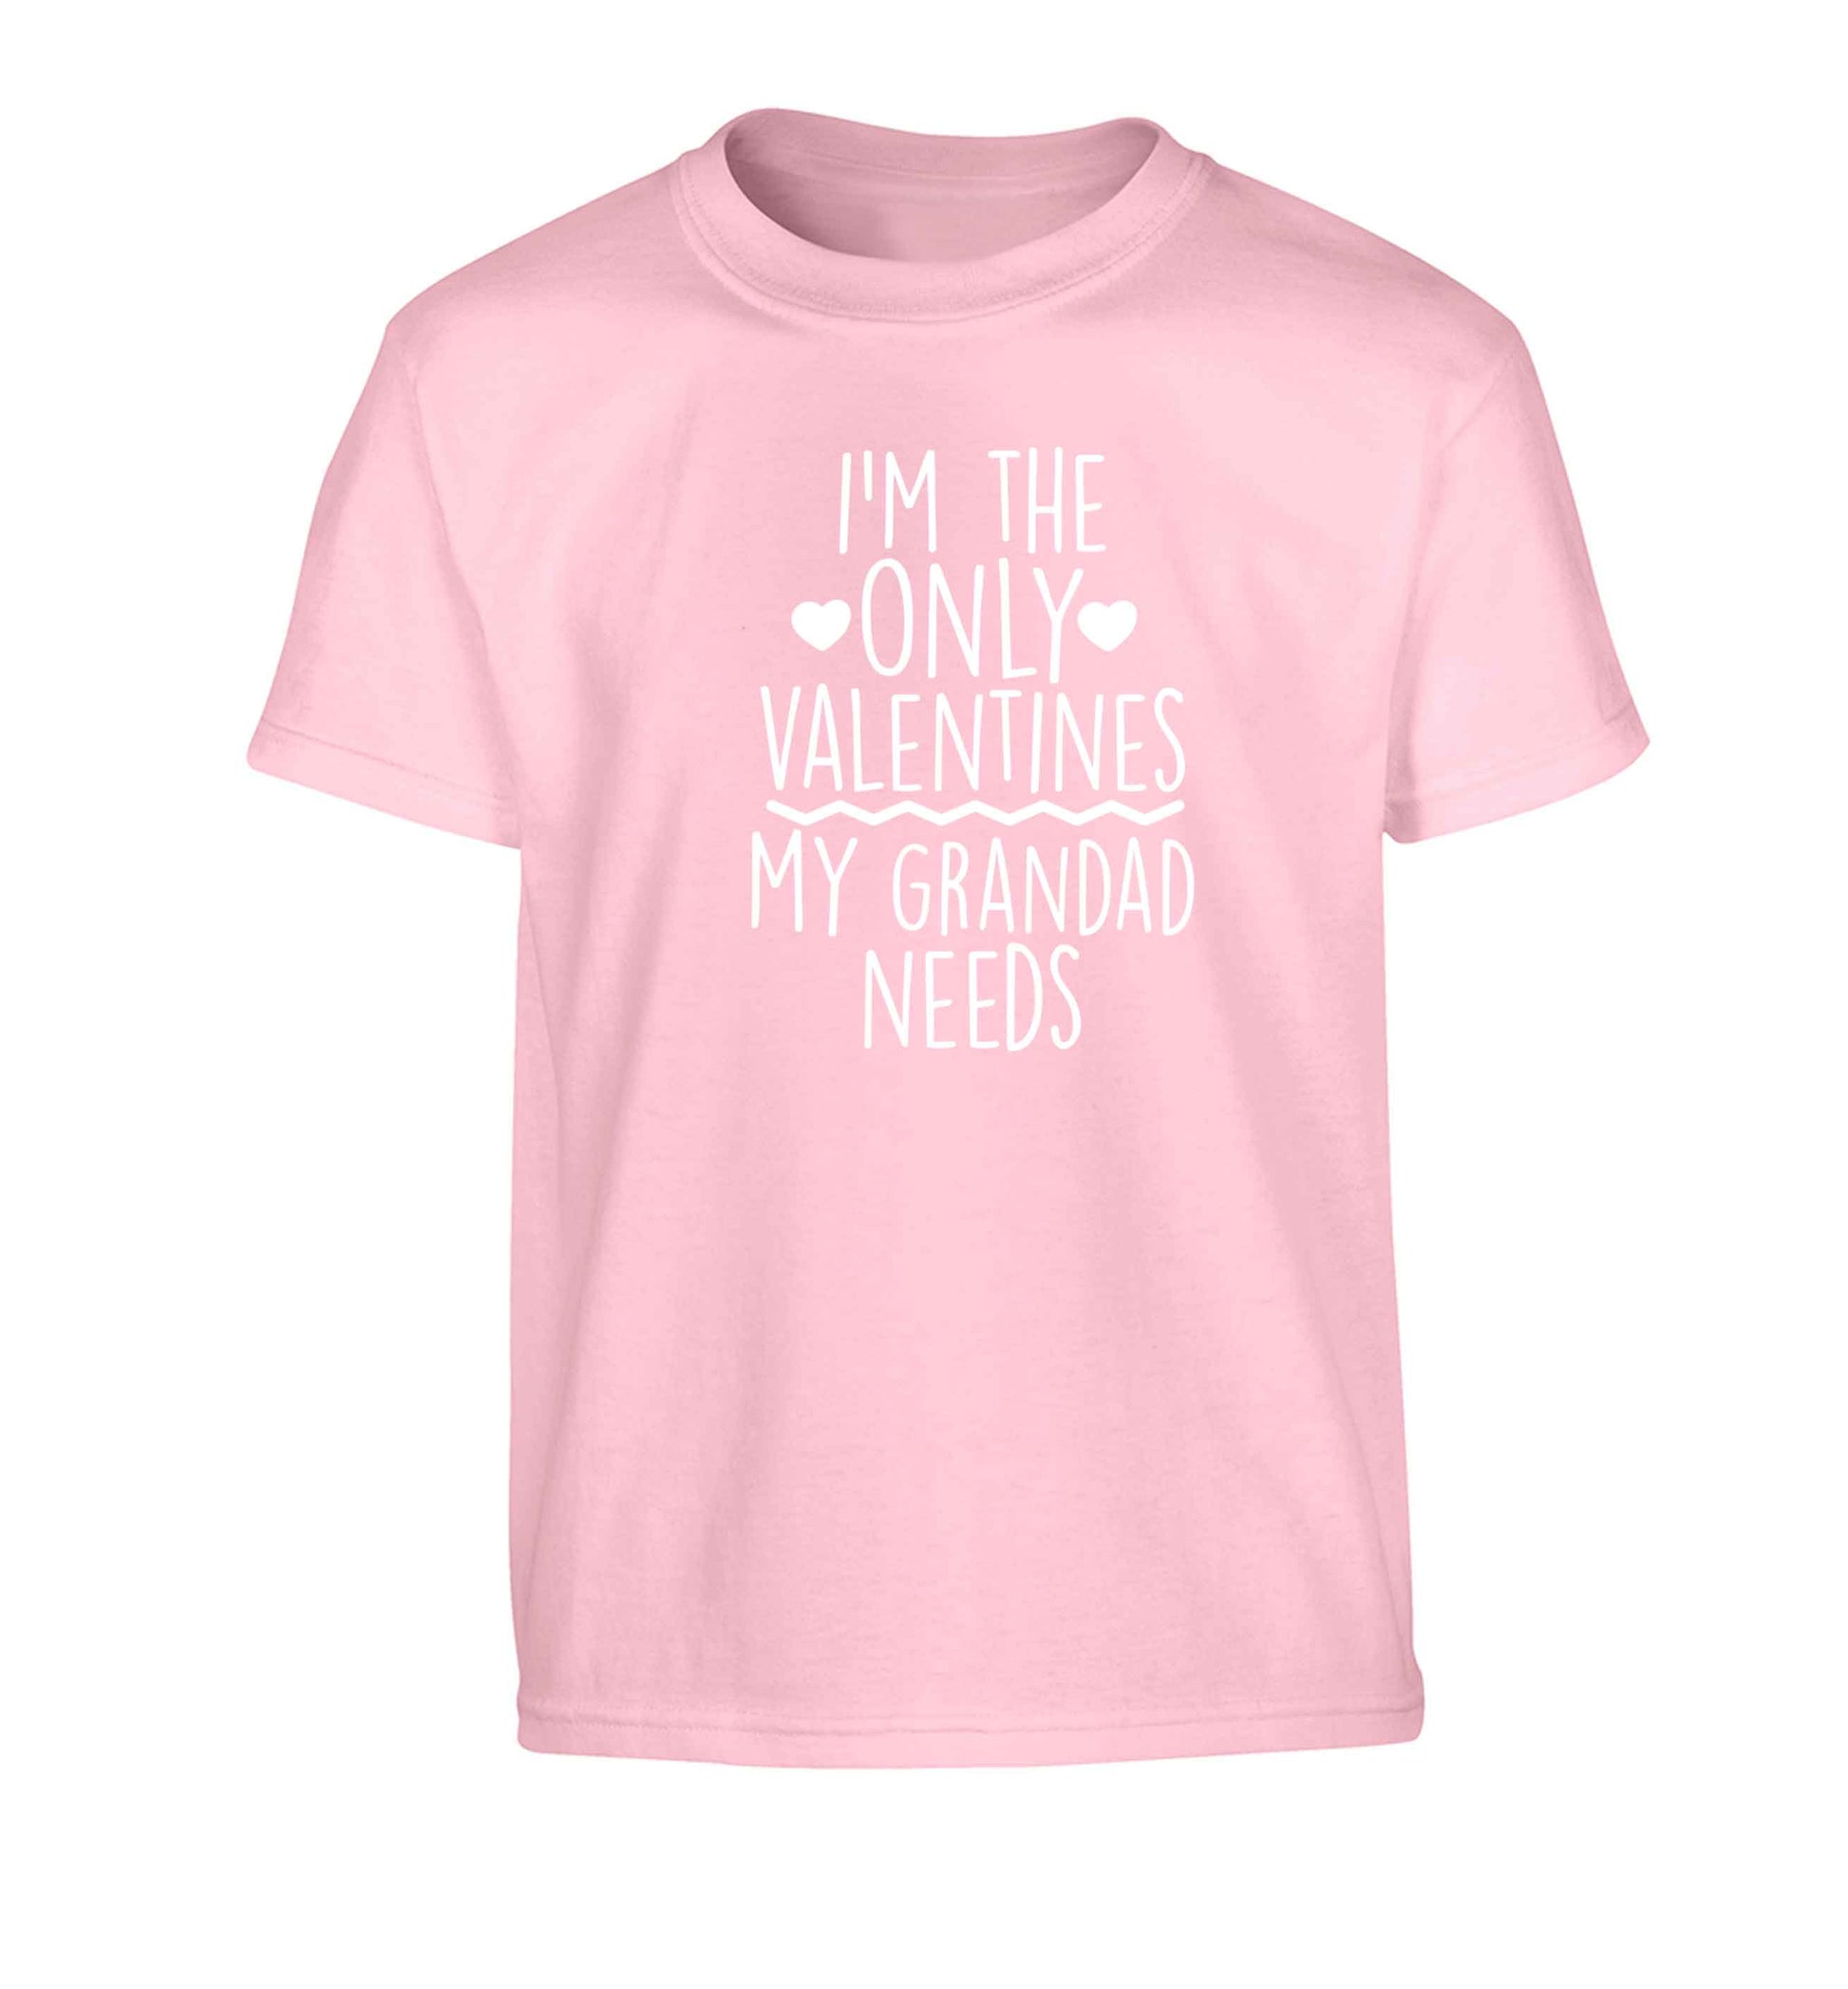 I'm the only valentines my grandad needs Children's light pink Tshirt 12-13 Years